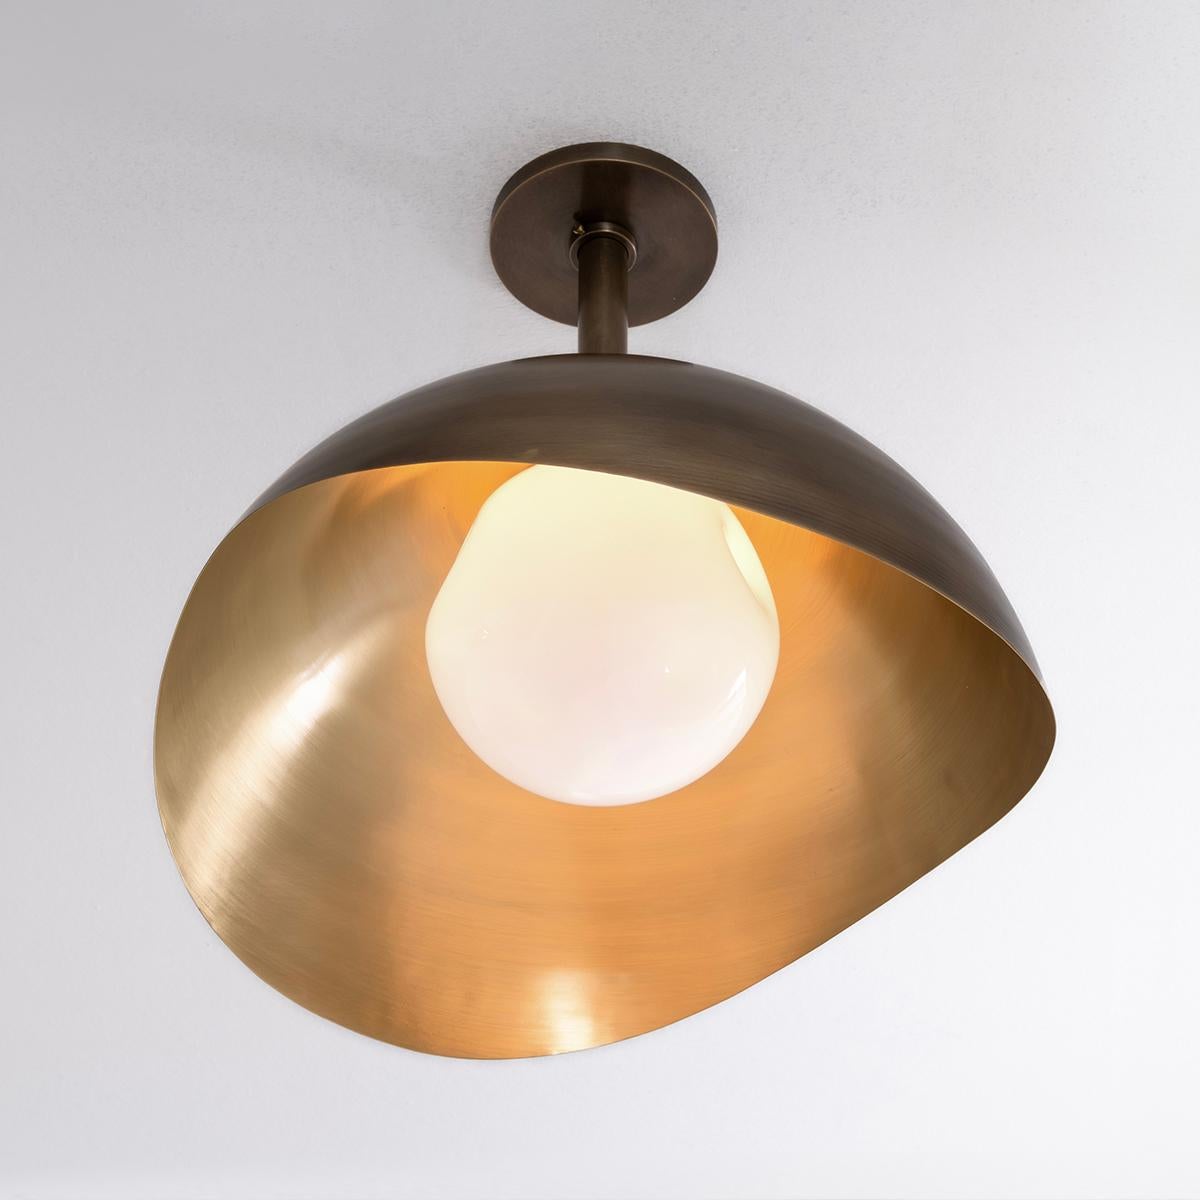 Italian Perla Grande Ceiling Light  - Satin Brass Interior and Bronze Exterior For Sale